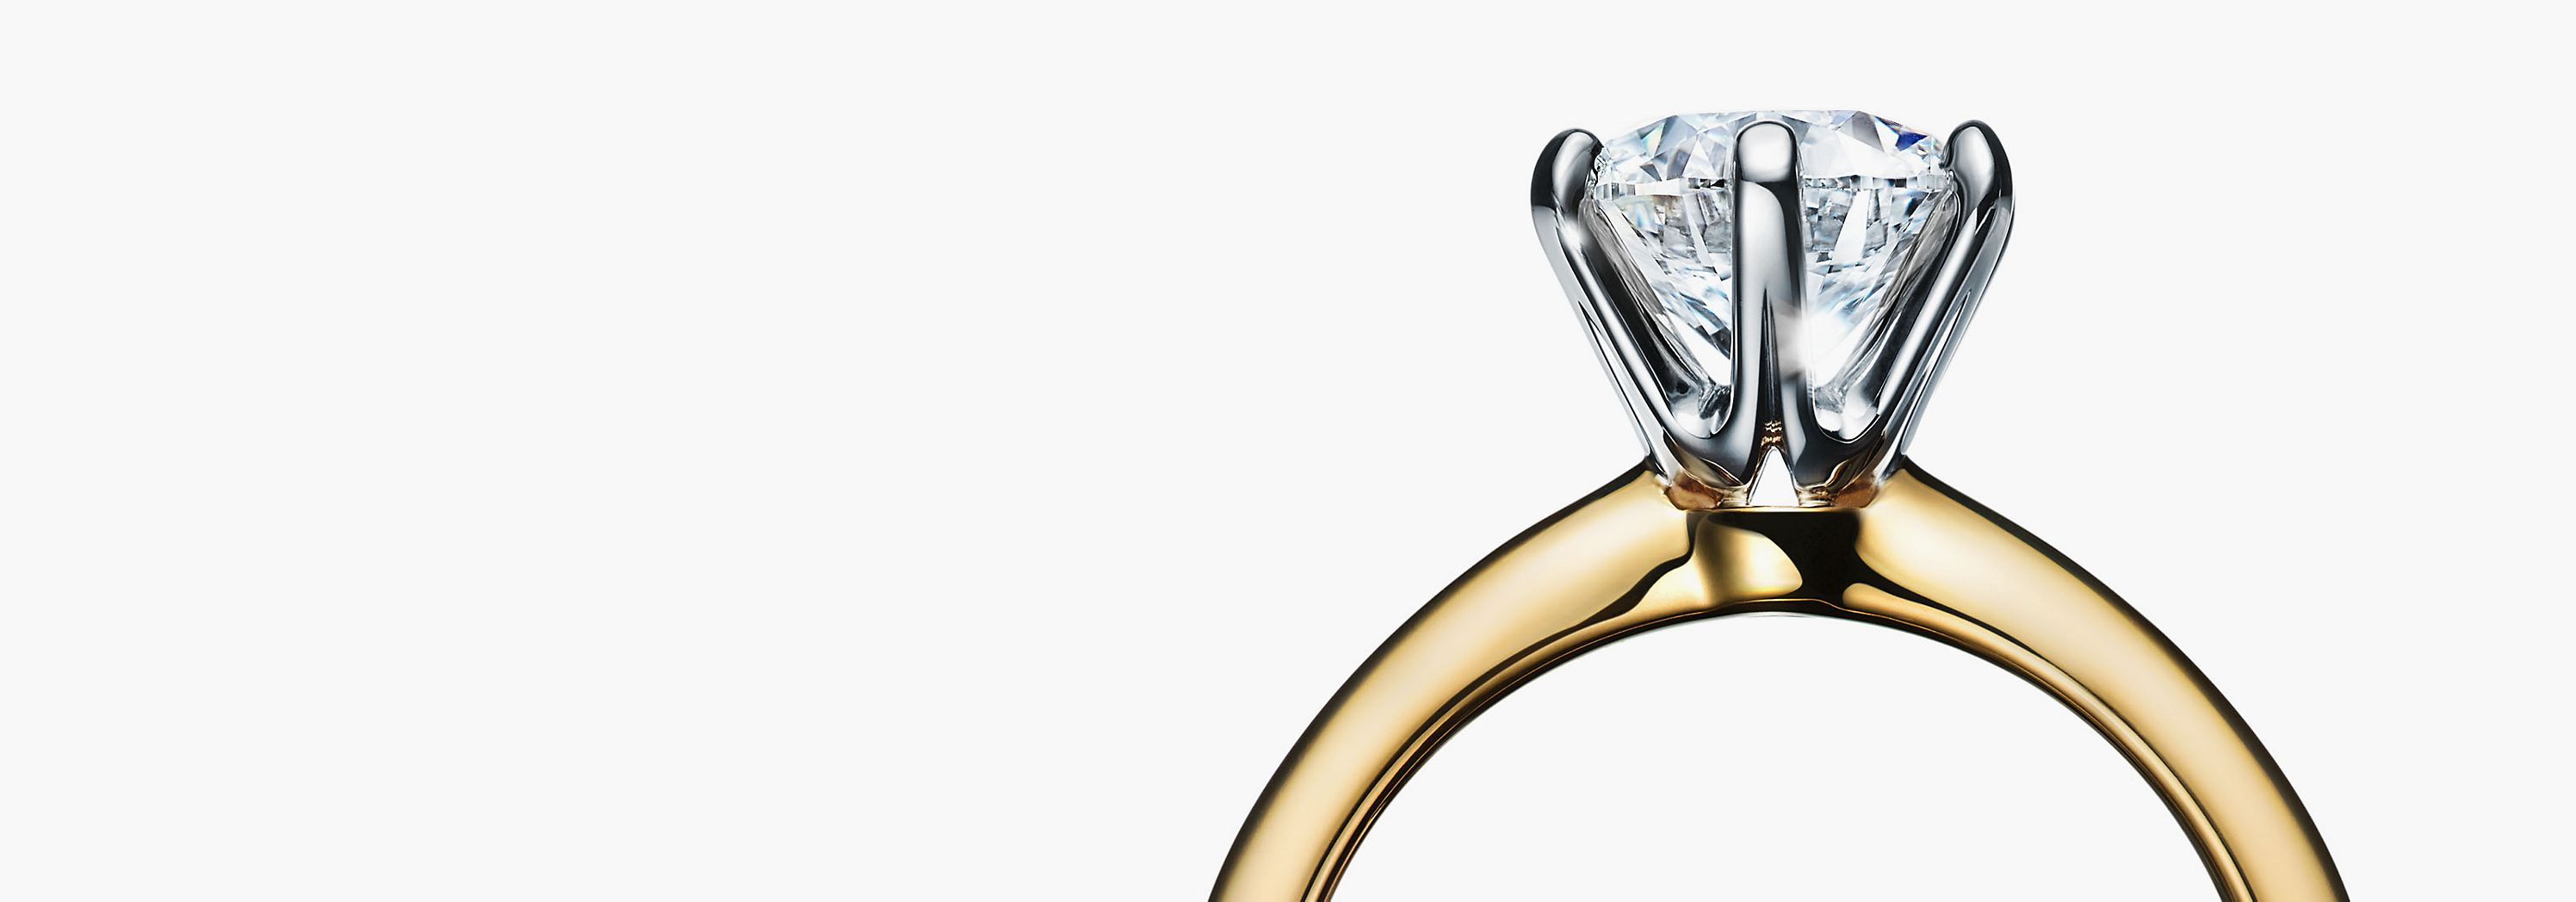 Verslaafde jaloezie manager Engagement Ring Styles and Settings | Tiffany & Co.